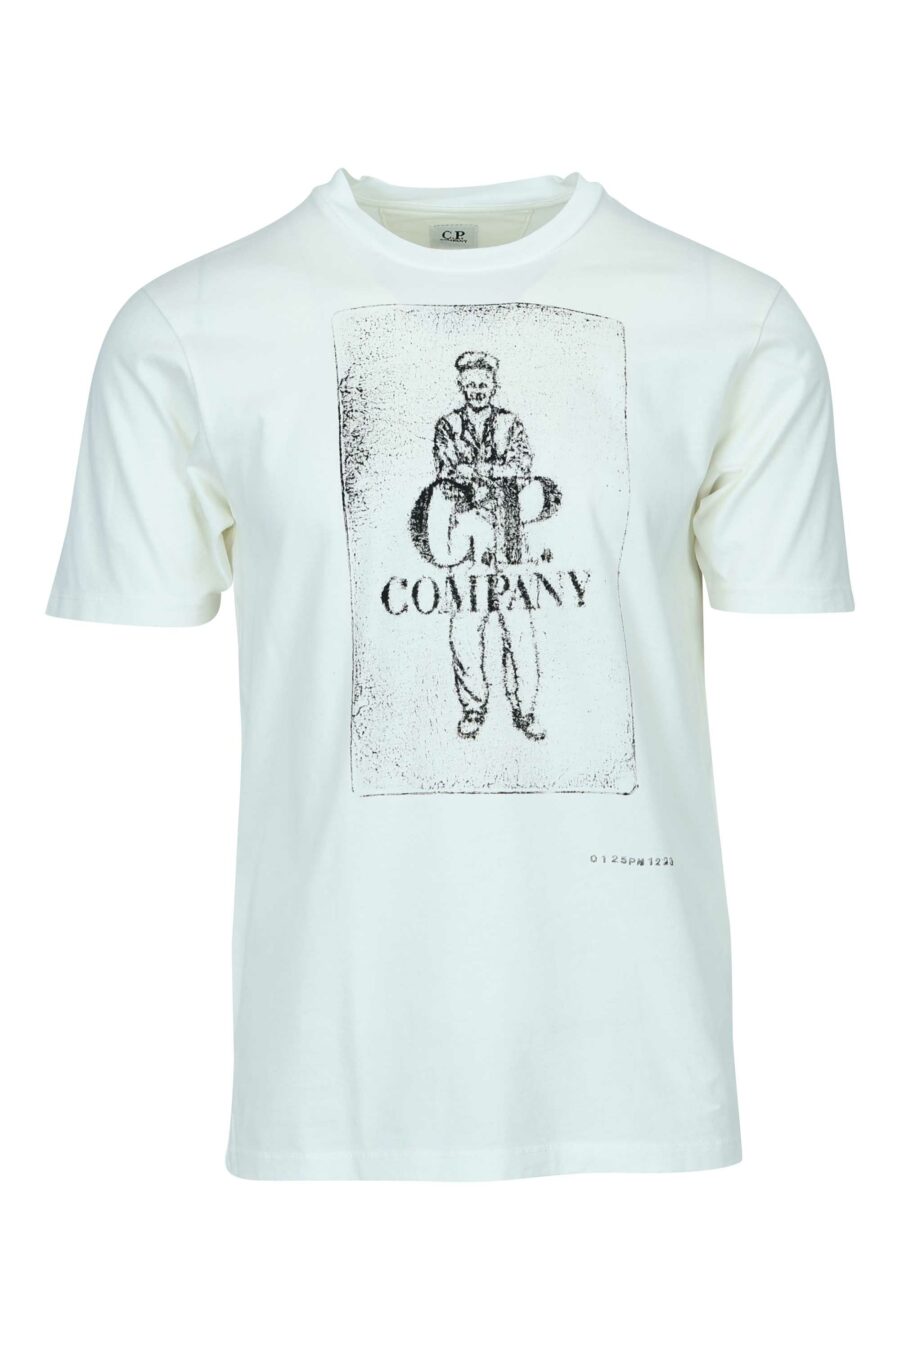 T-shirt blanc avec maxilogue marin et logo "cp" - 7620943776478